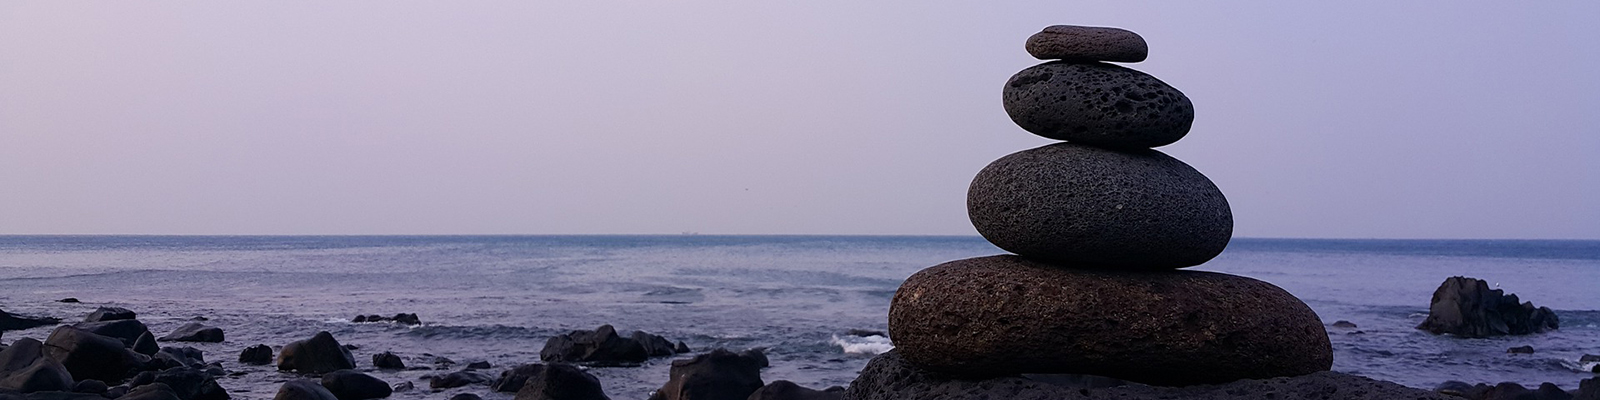 Stones balancing on a beach